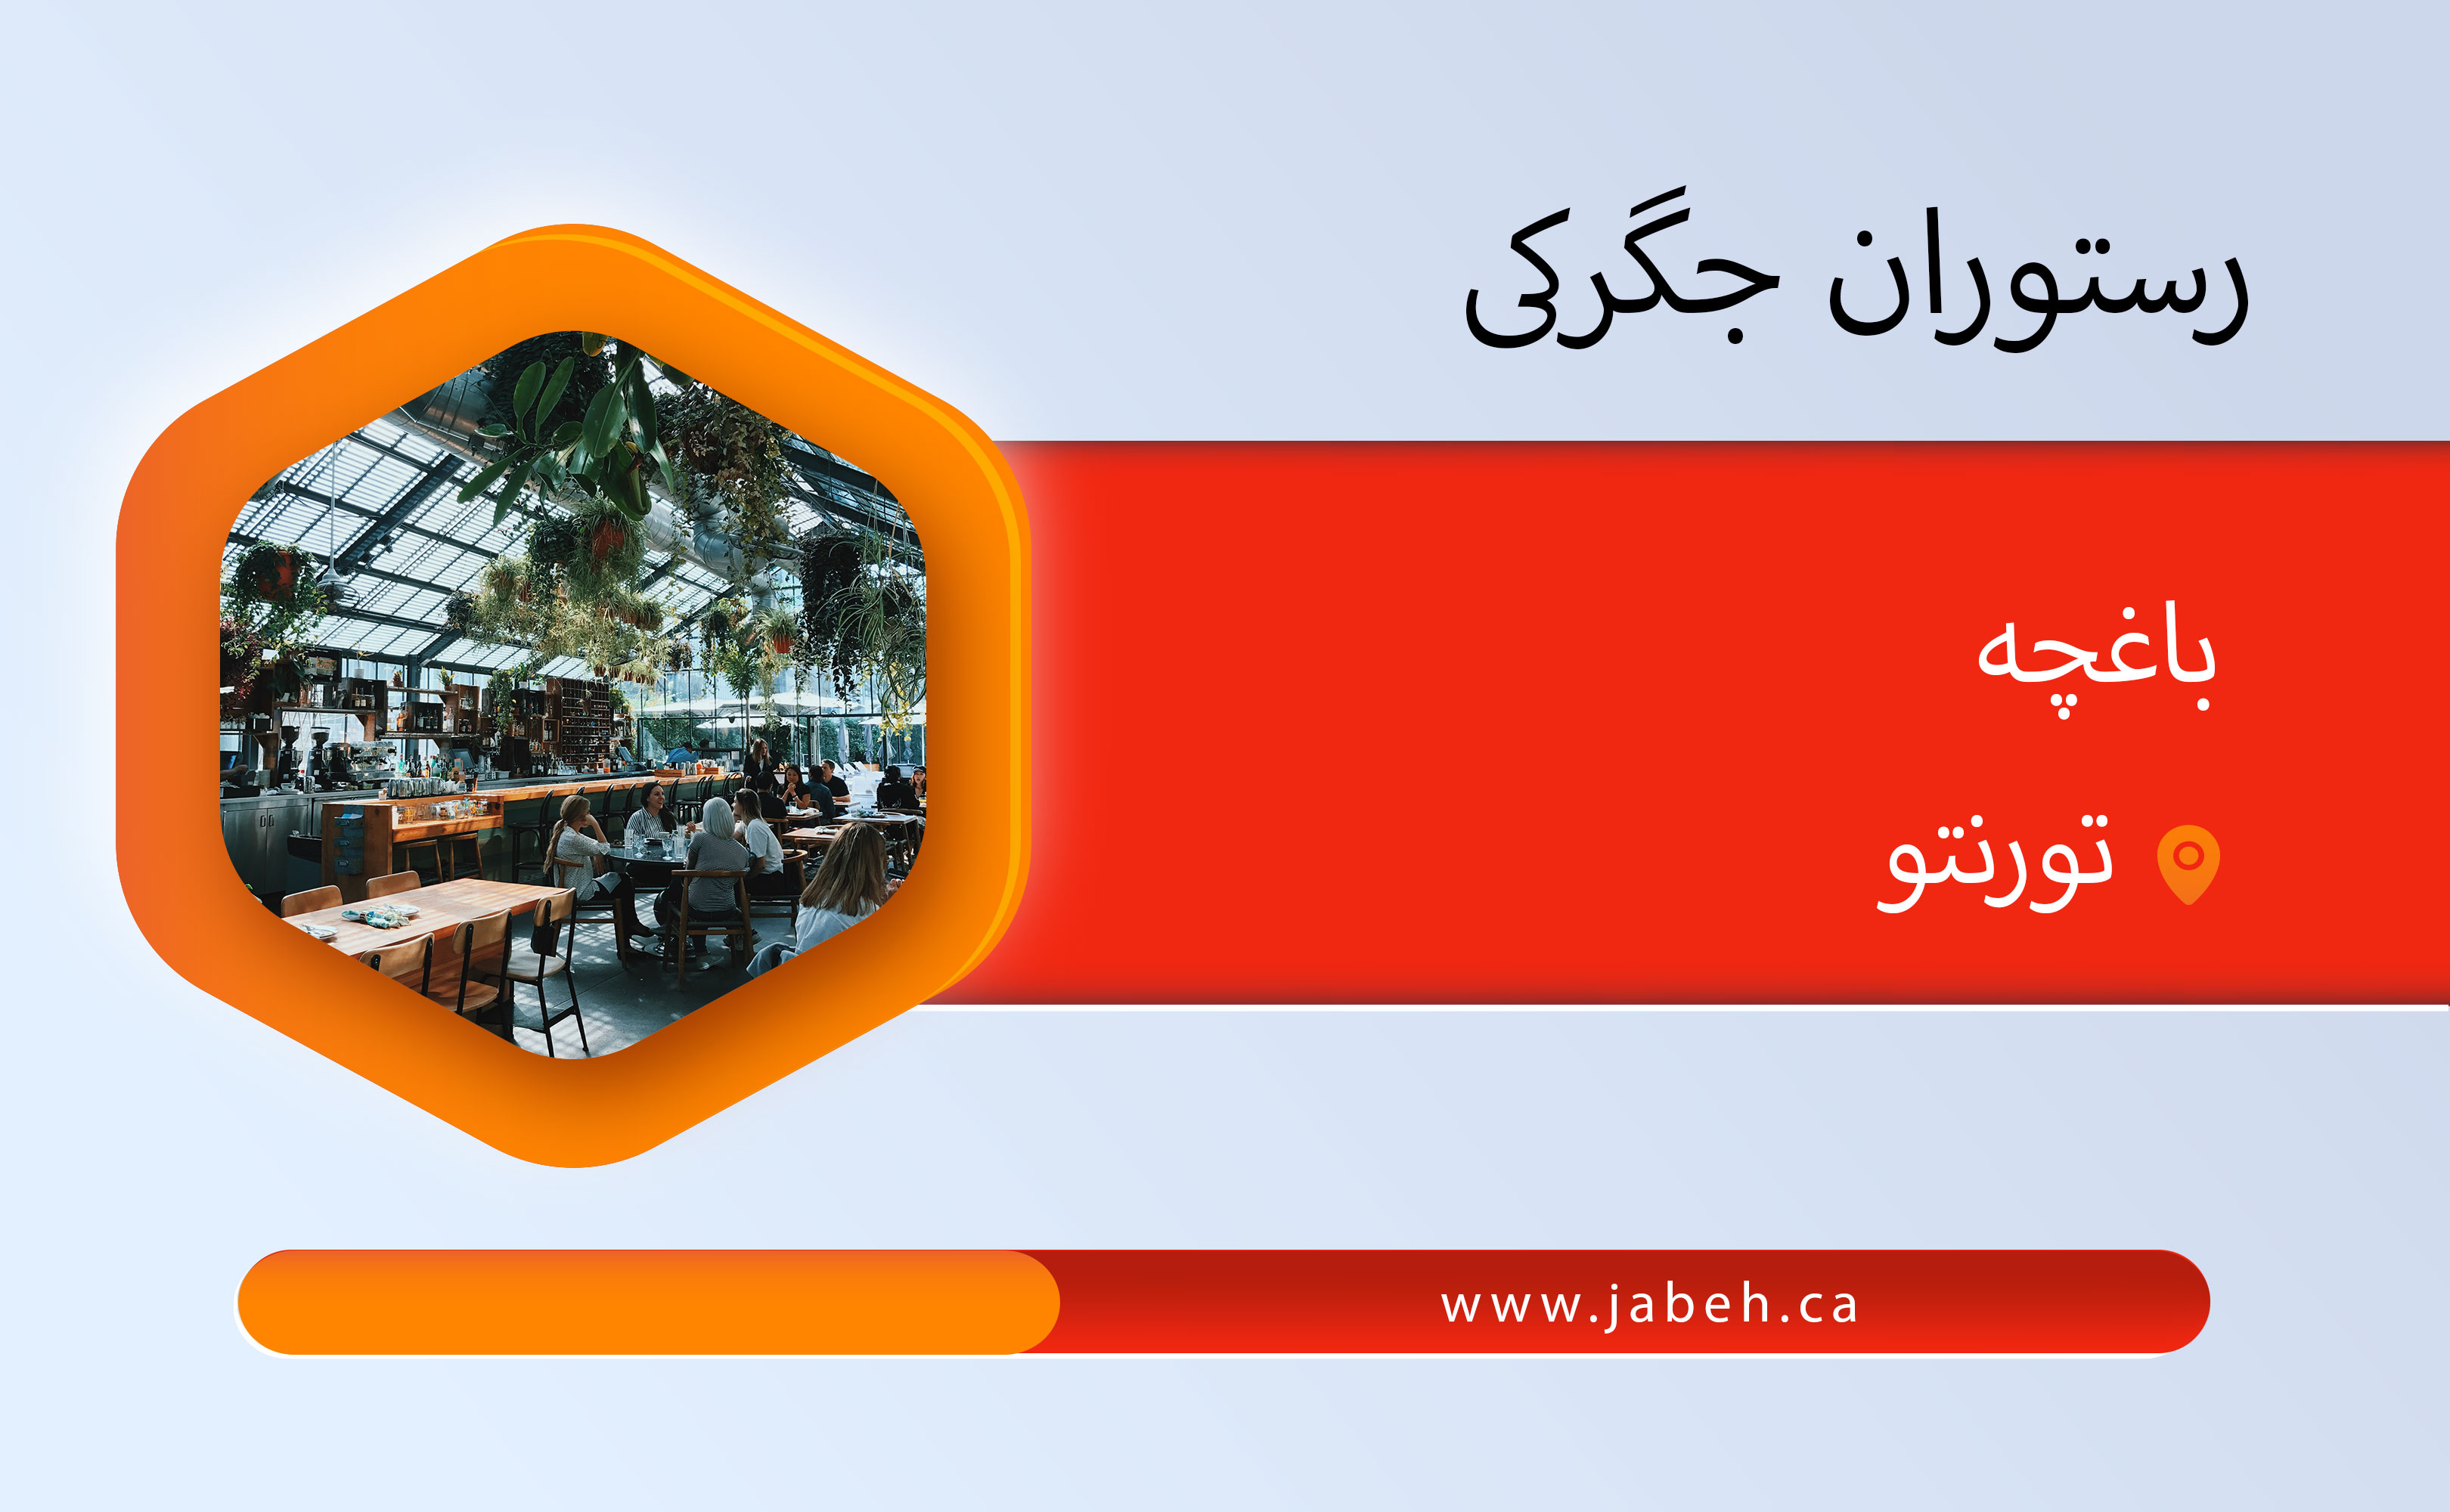 Jegraki Baghche restaurant in Toronto